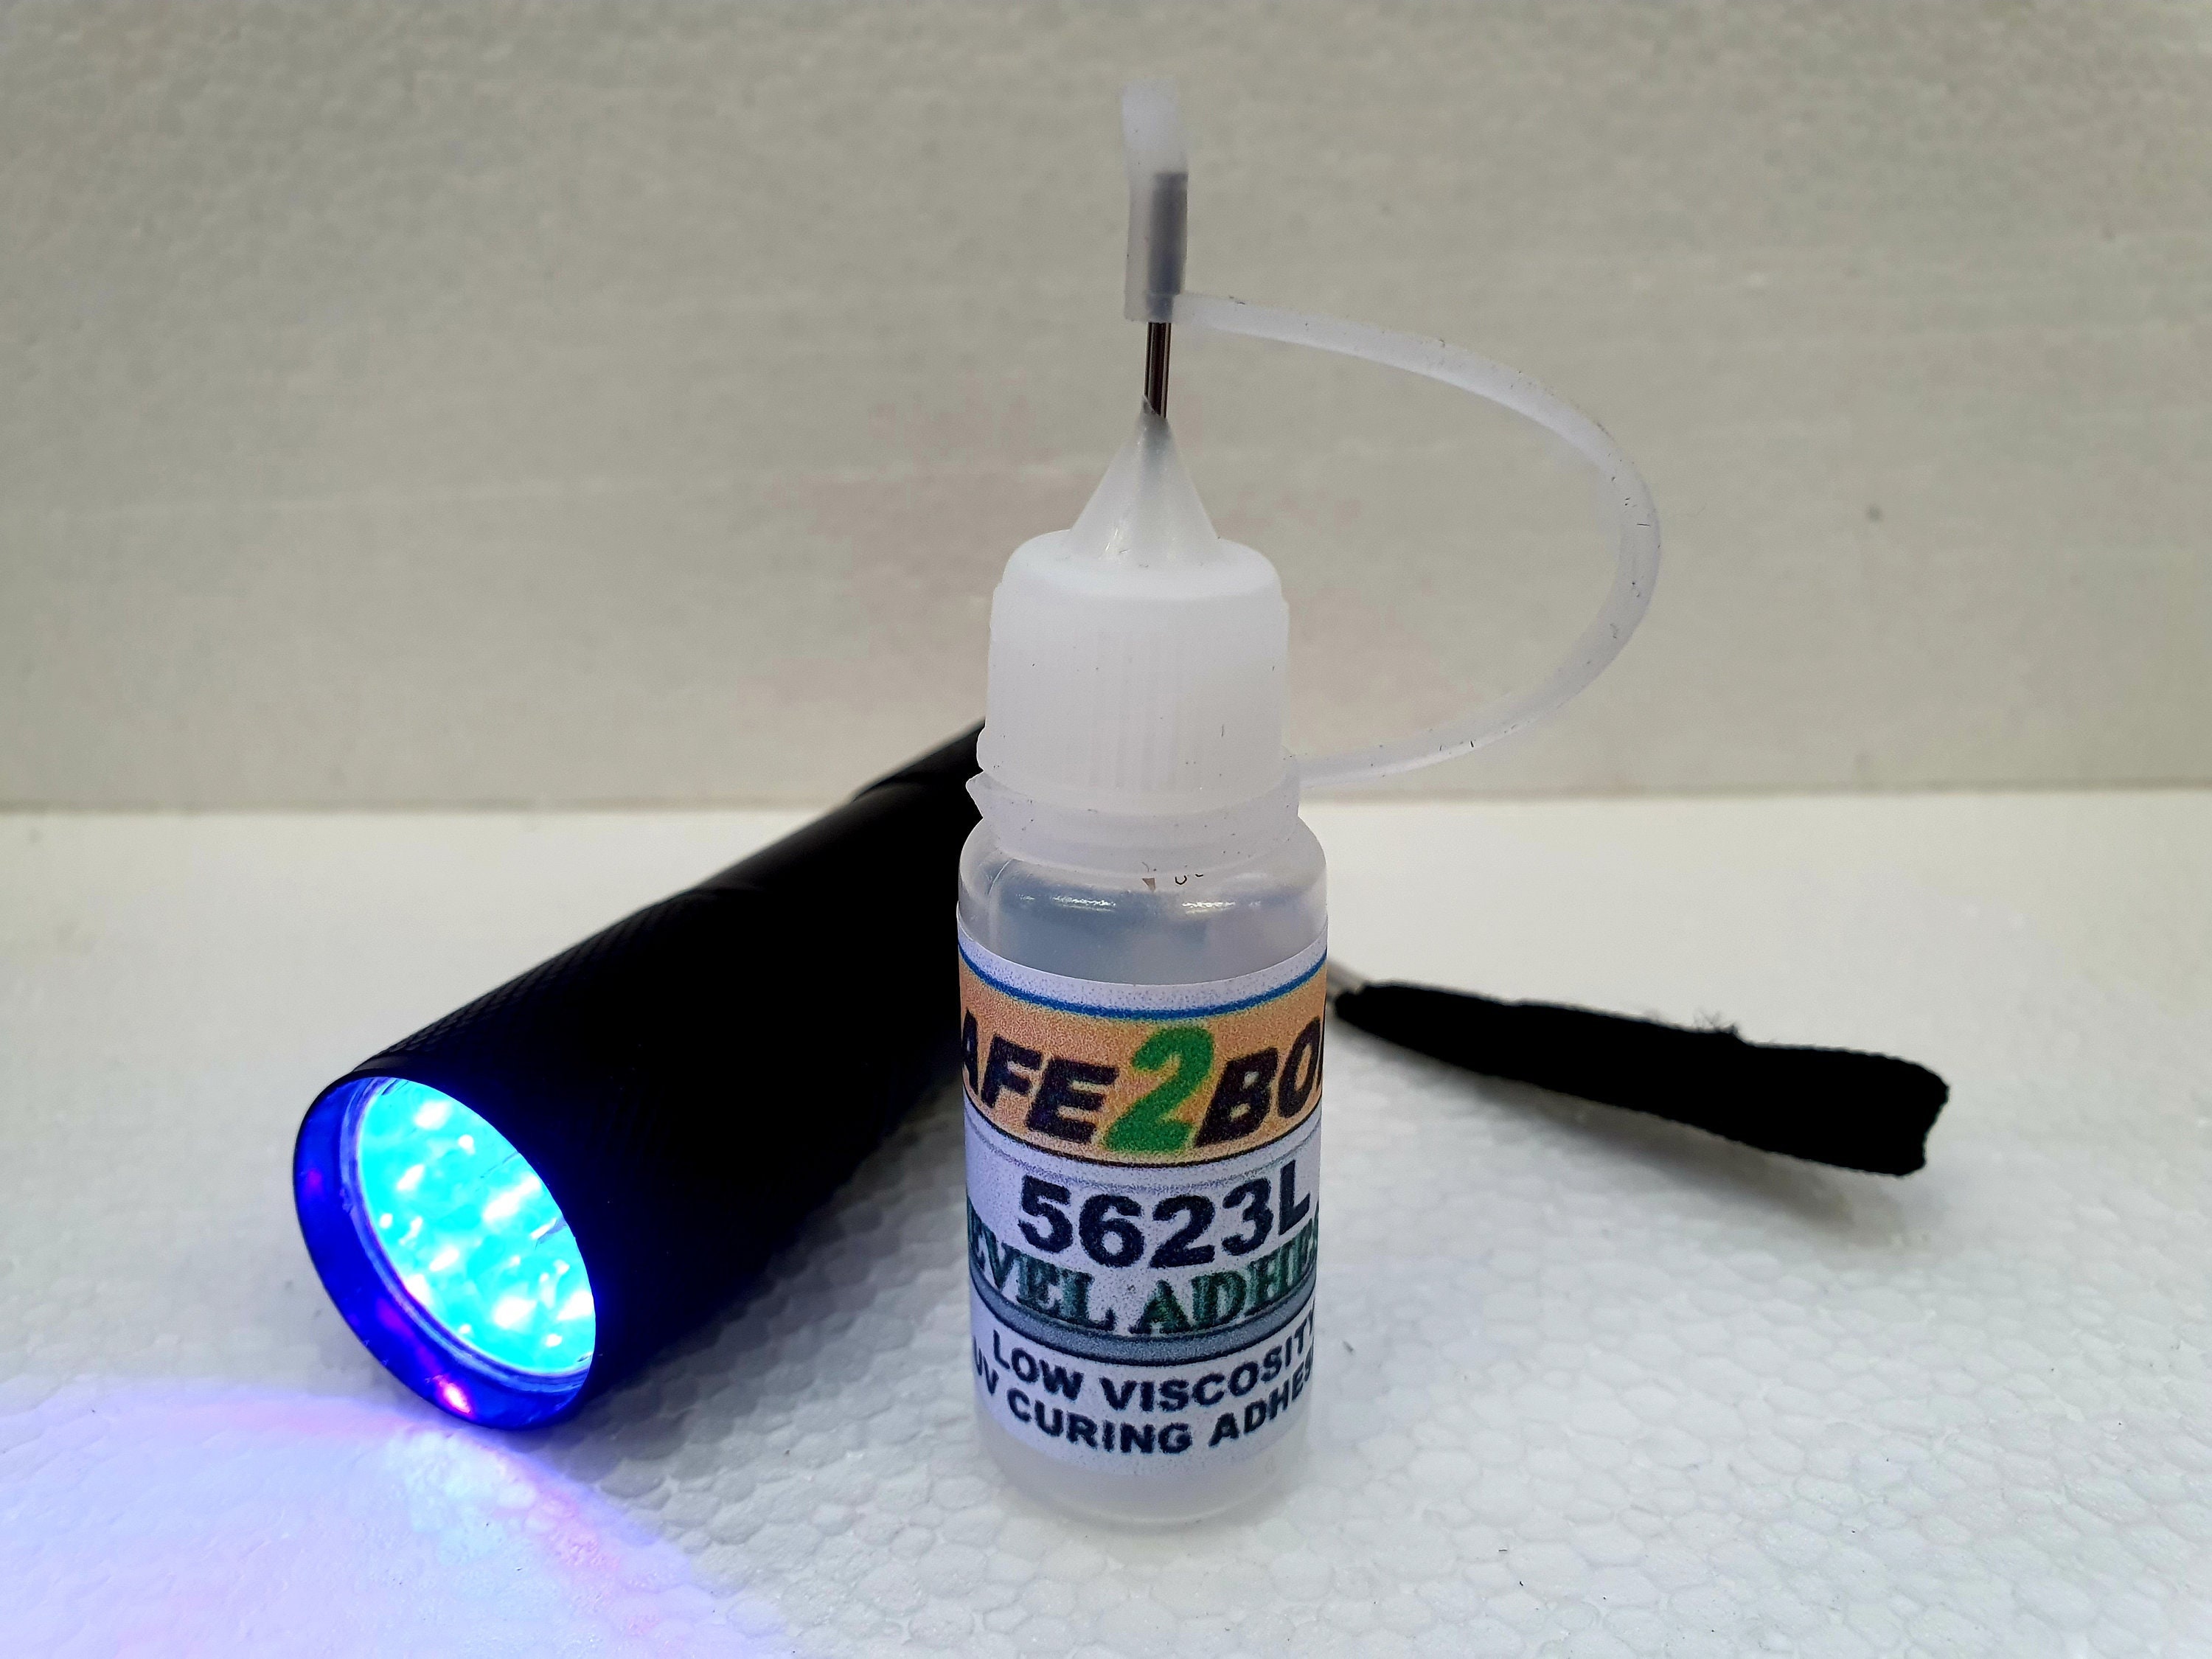 JDiction UV Light for Resin, Super Large UV Resin Light with LED Display  Screen, Higher Power Lightweight Portable UV Lamp for UV Resin, Jewelry